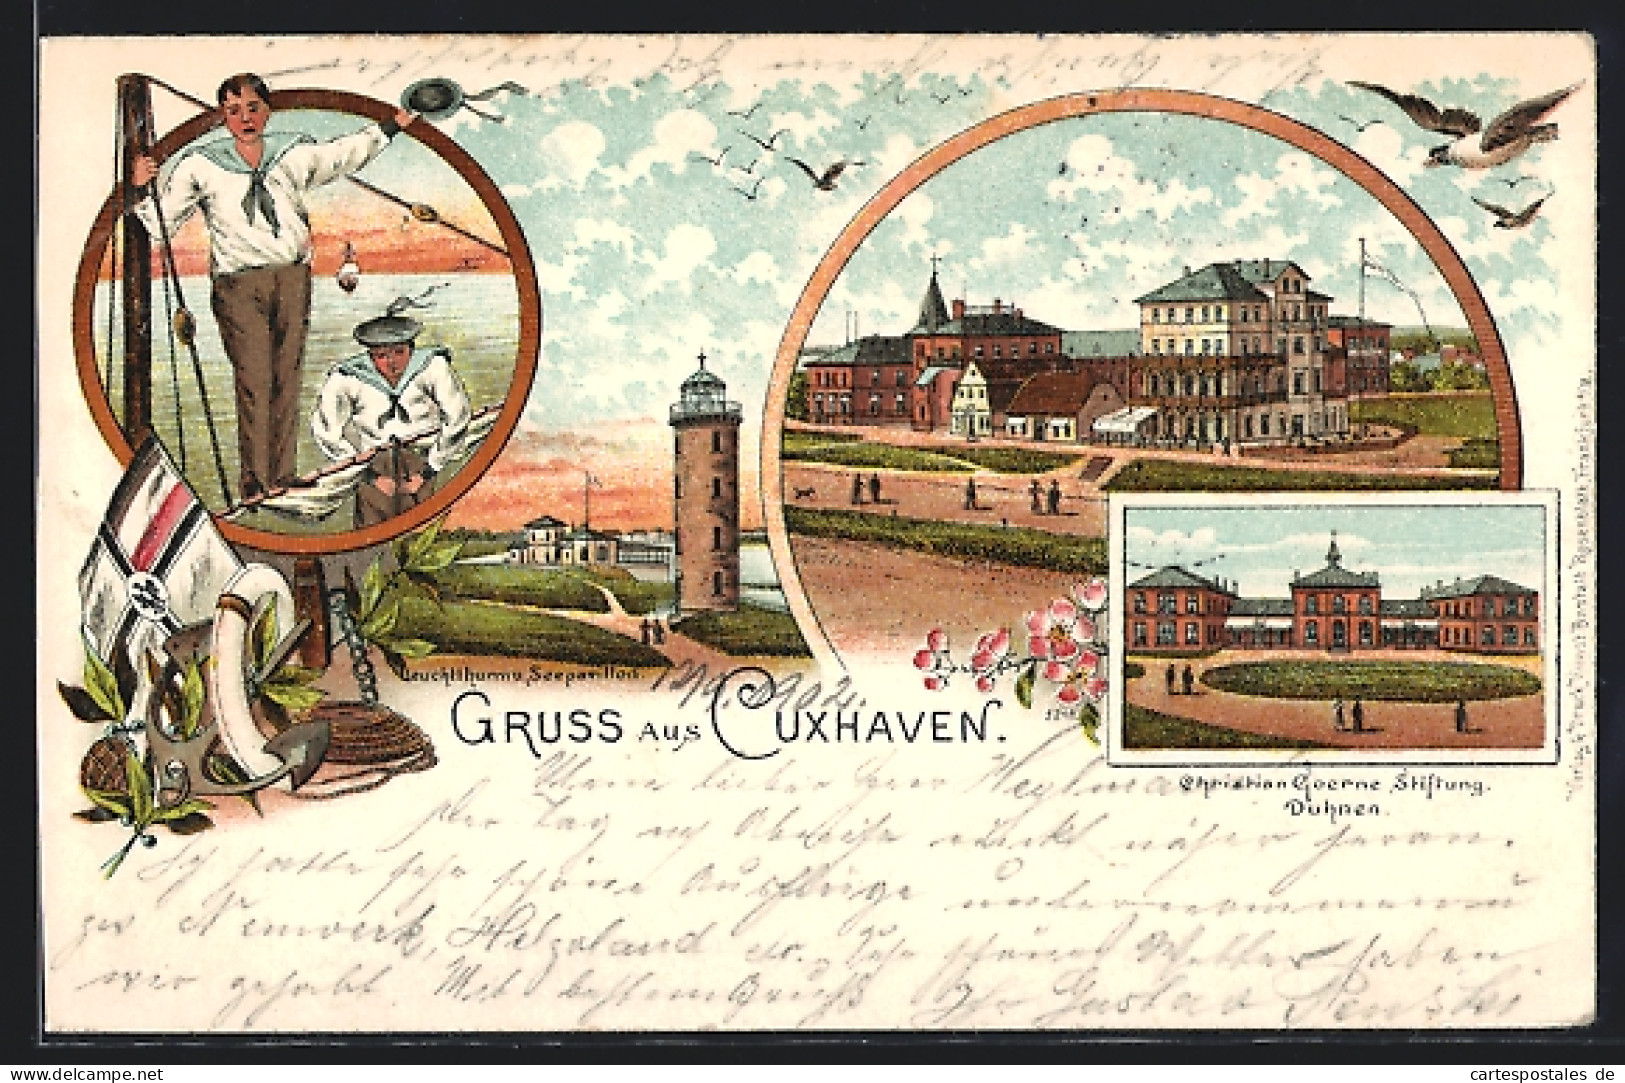 Lithographie Cuxhaven, Christian Goerne Stiftung, Matrosen An Deck, Flagge, Ortspartie  - Cuxhaven